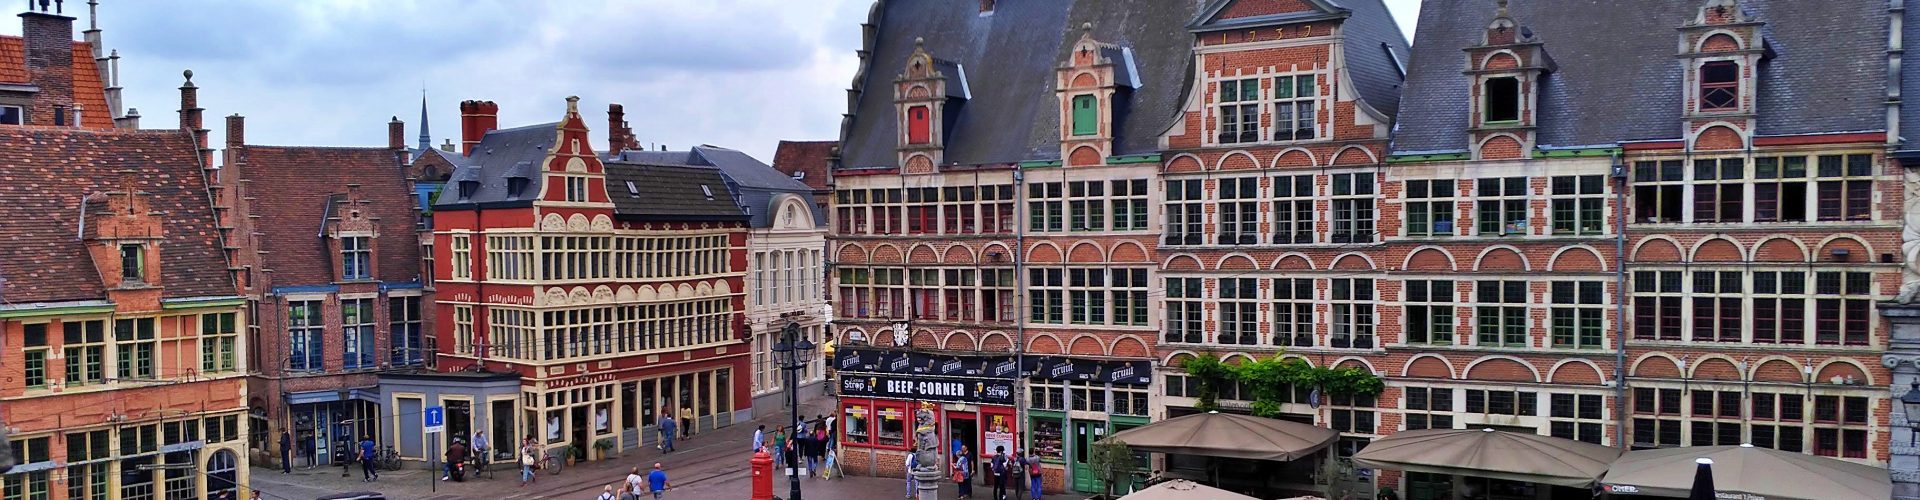 O que fazer em Gent: praça Sint-Veerleplein